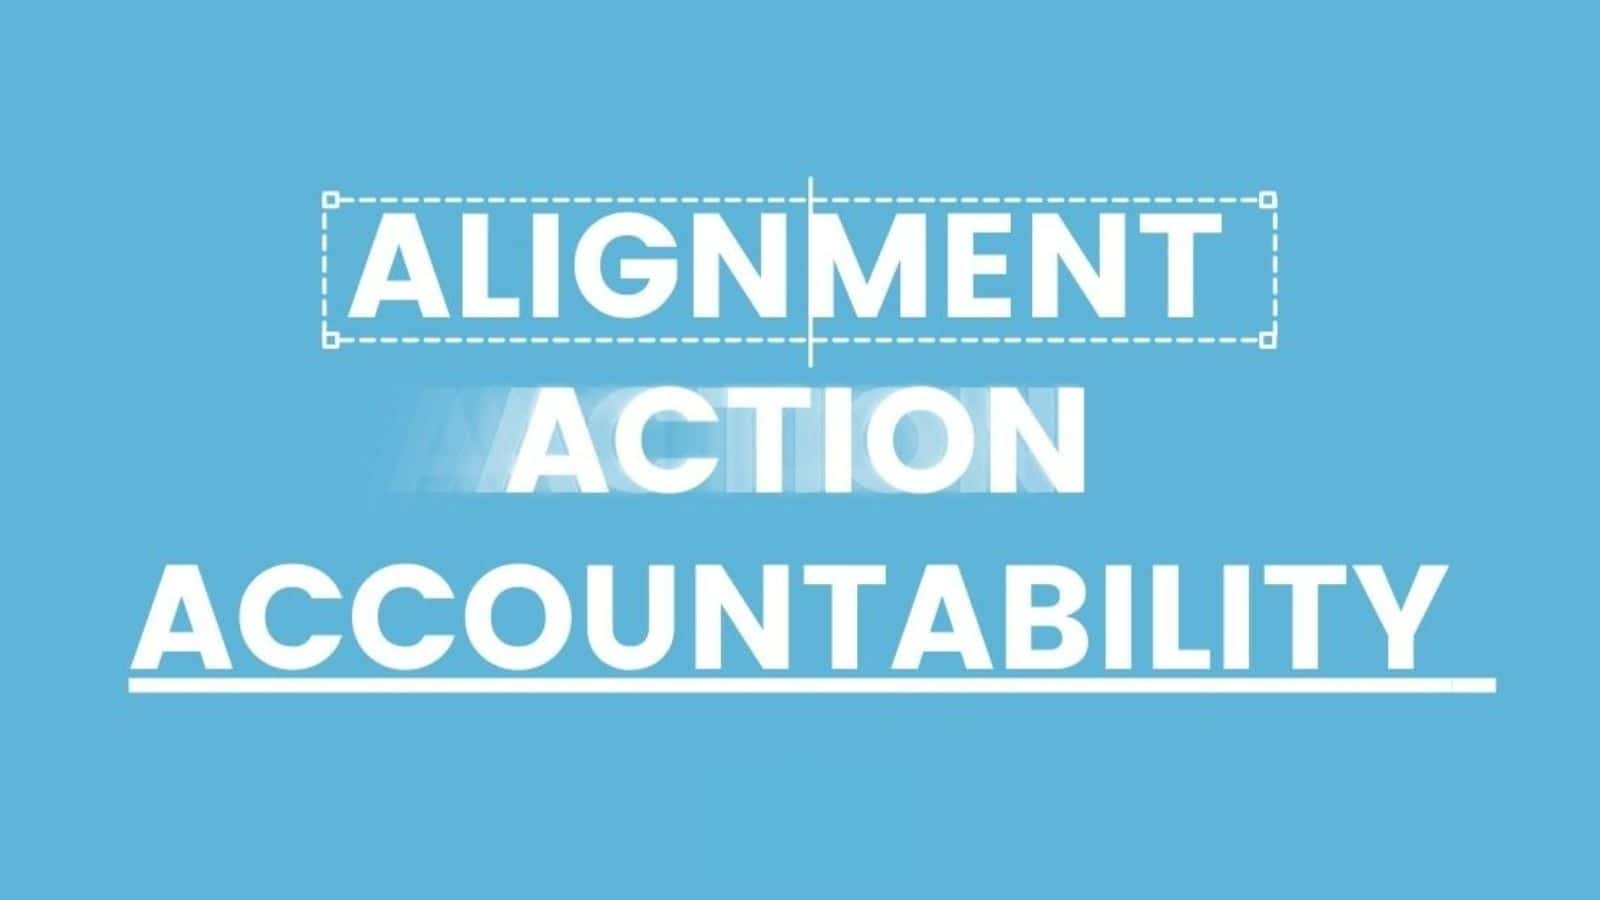 Alignment, Action, Accountability